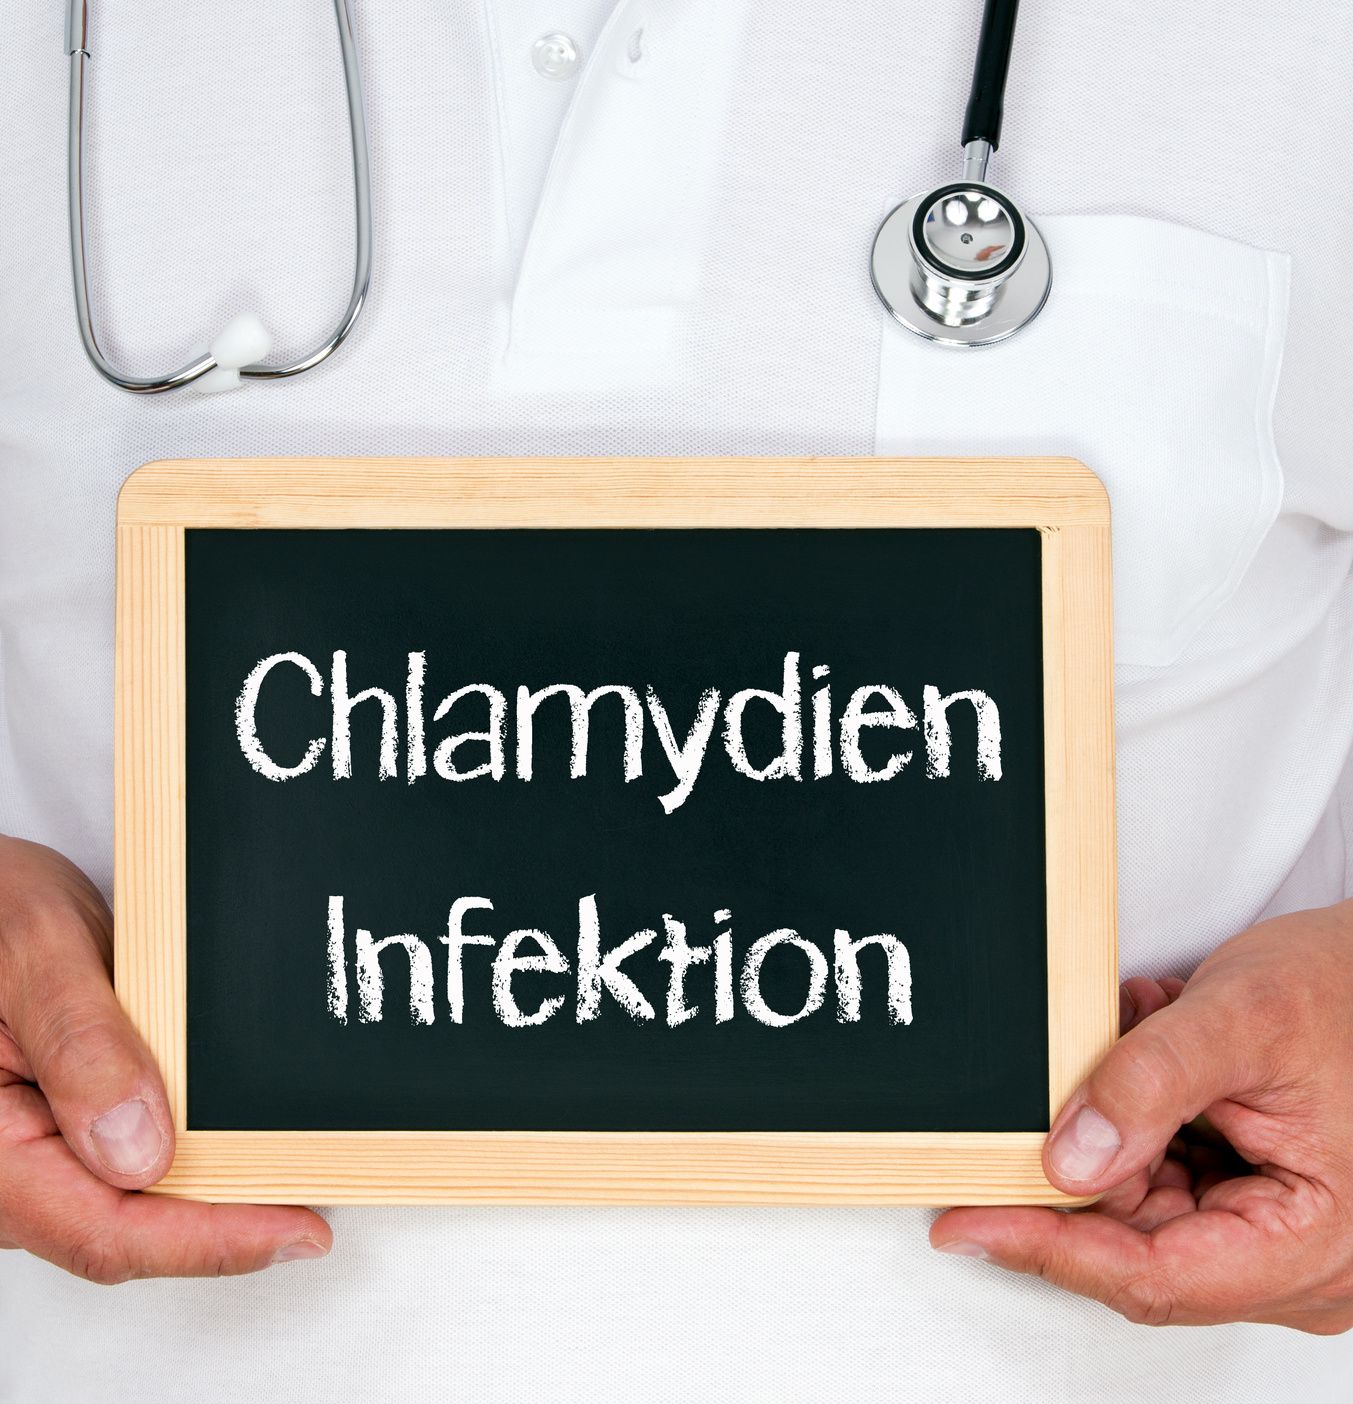 Infektion (Chlamydien)